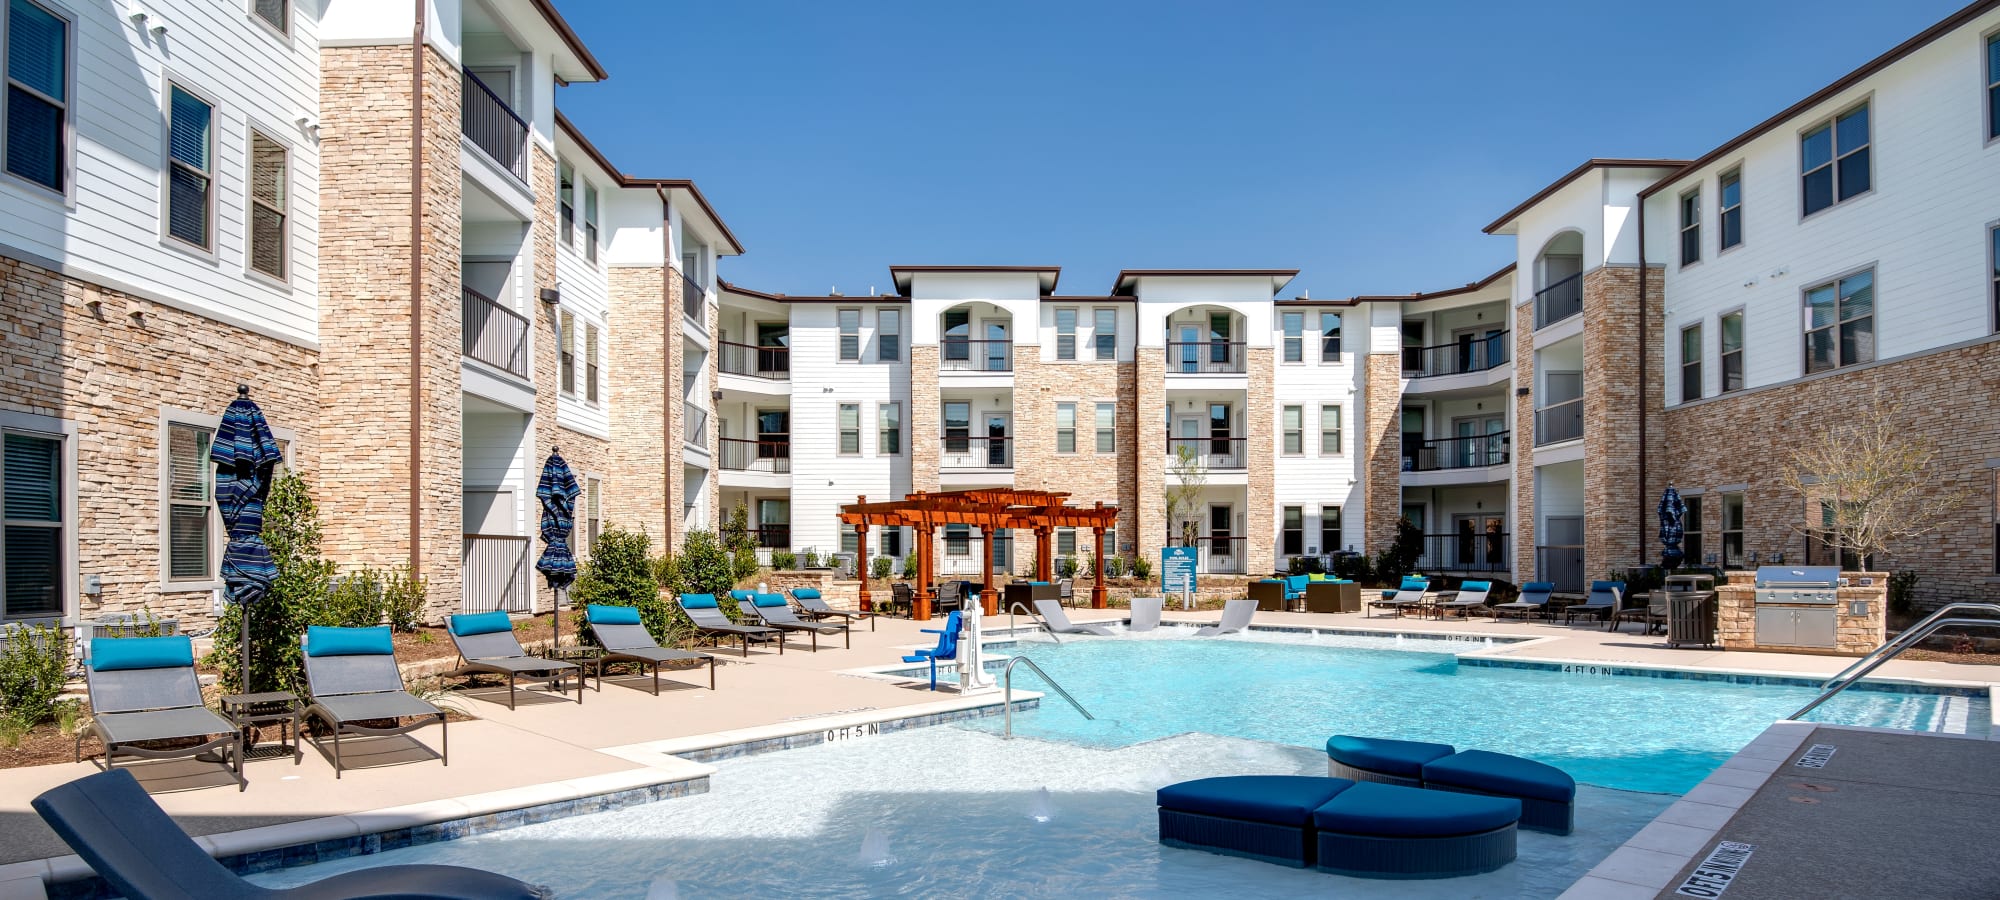 Resort style pool at Bellrock Upper North in Haltom City, Texas